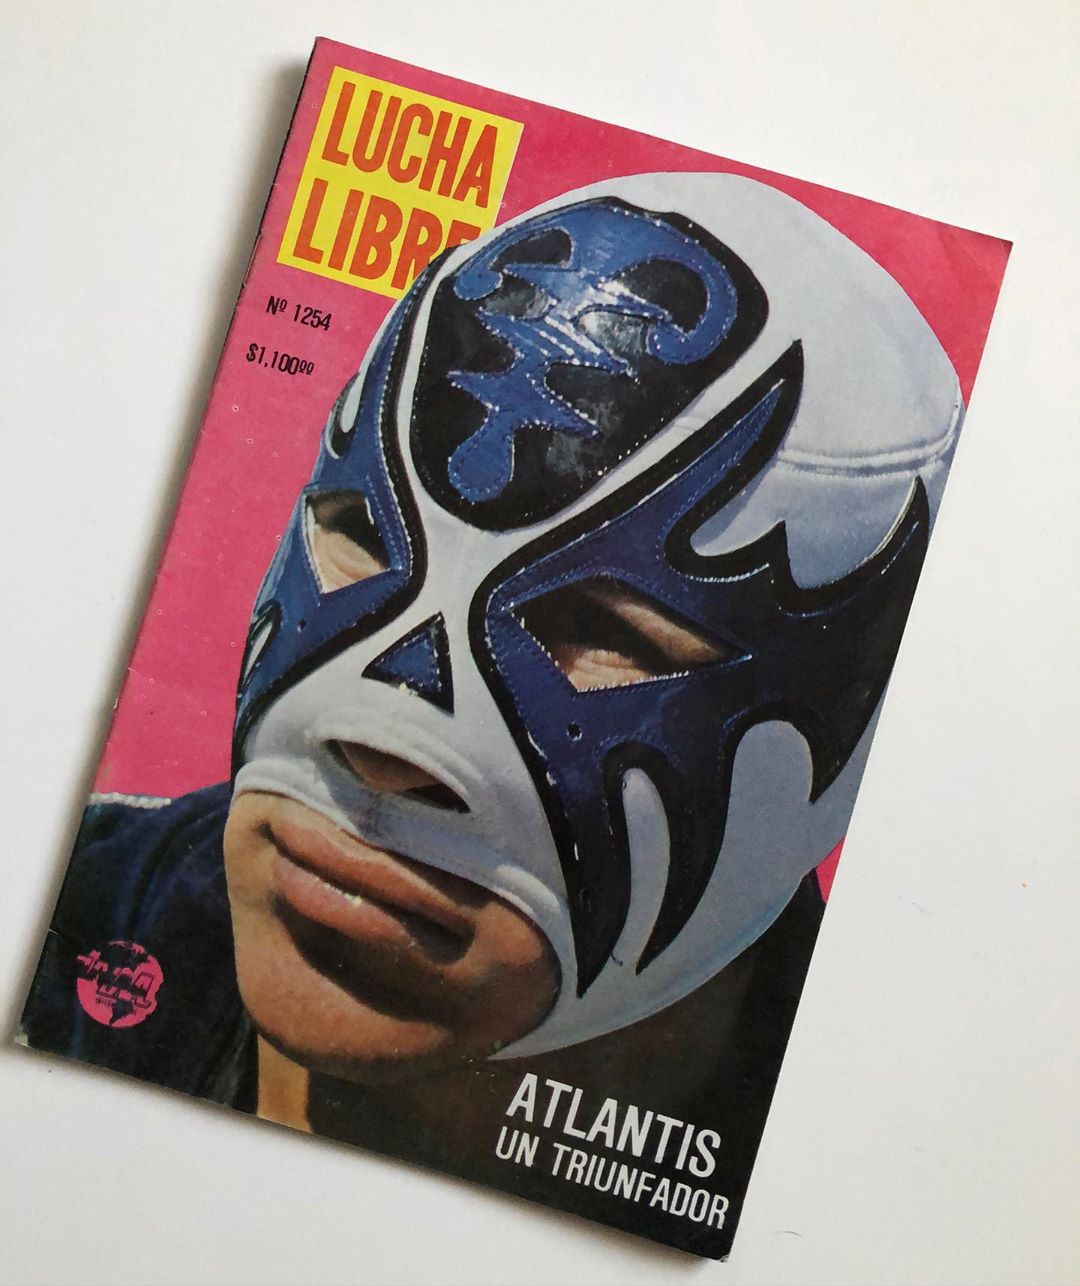 Lucha Libre Volume 1254